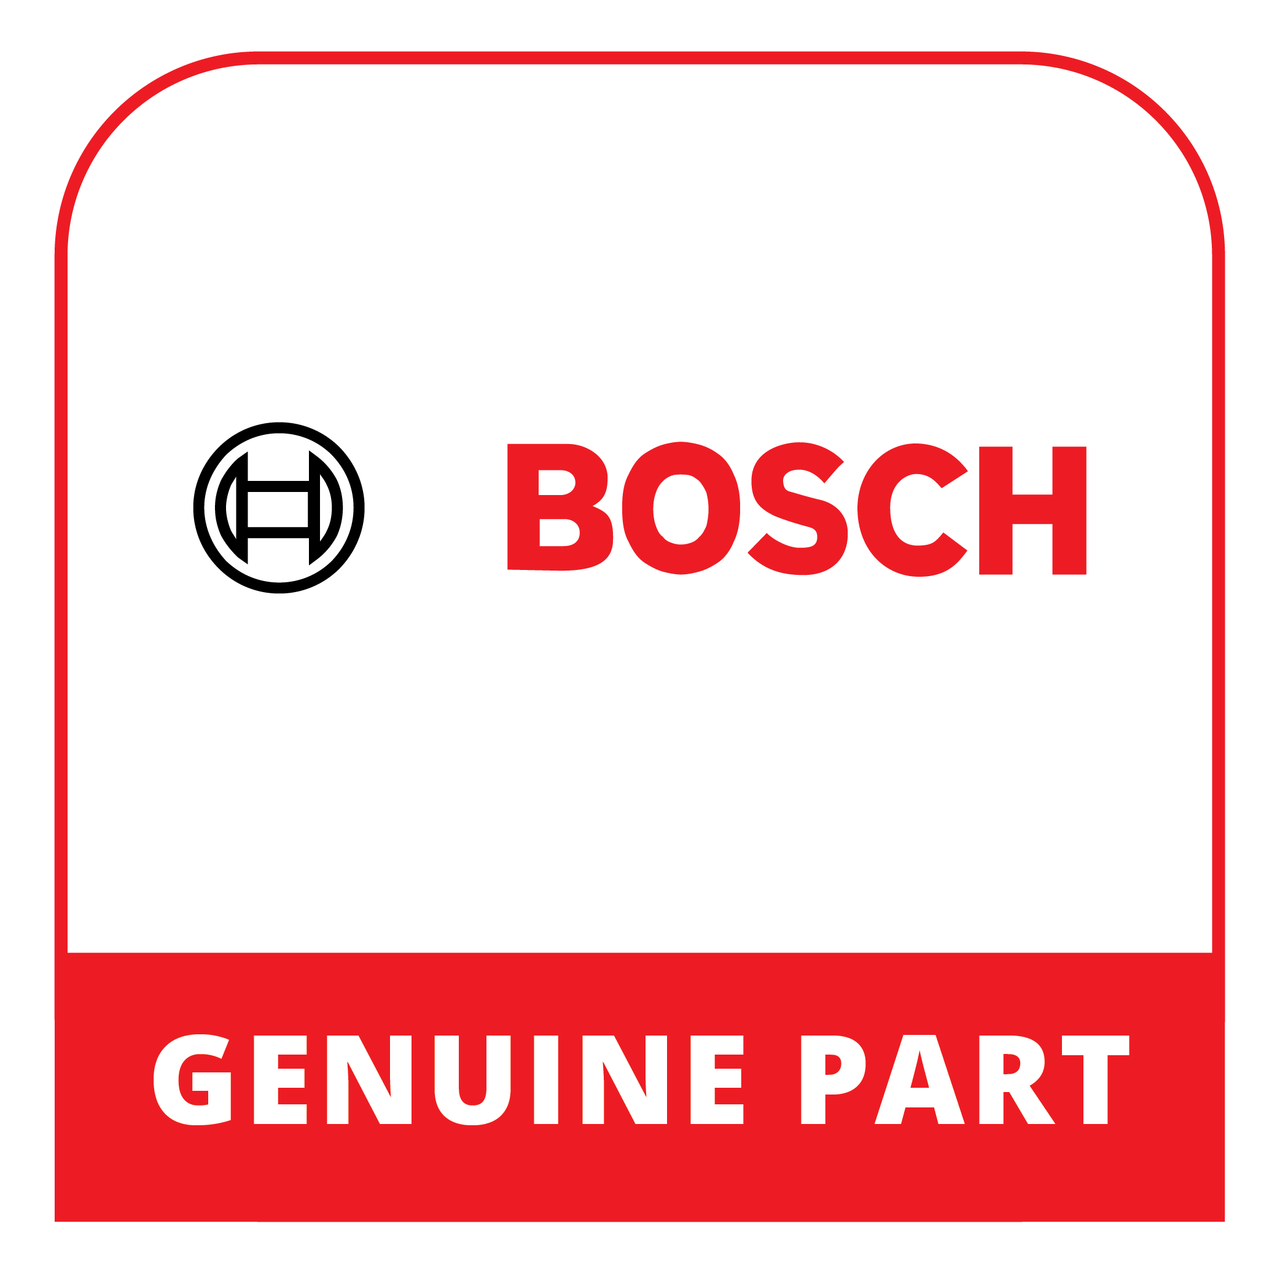 Bosch (Thermador) 20002904 - Lower Crockery Basket - Genuine Bosch (Thermador) Part